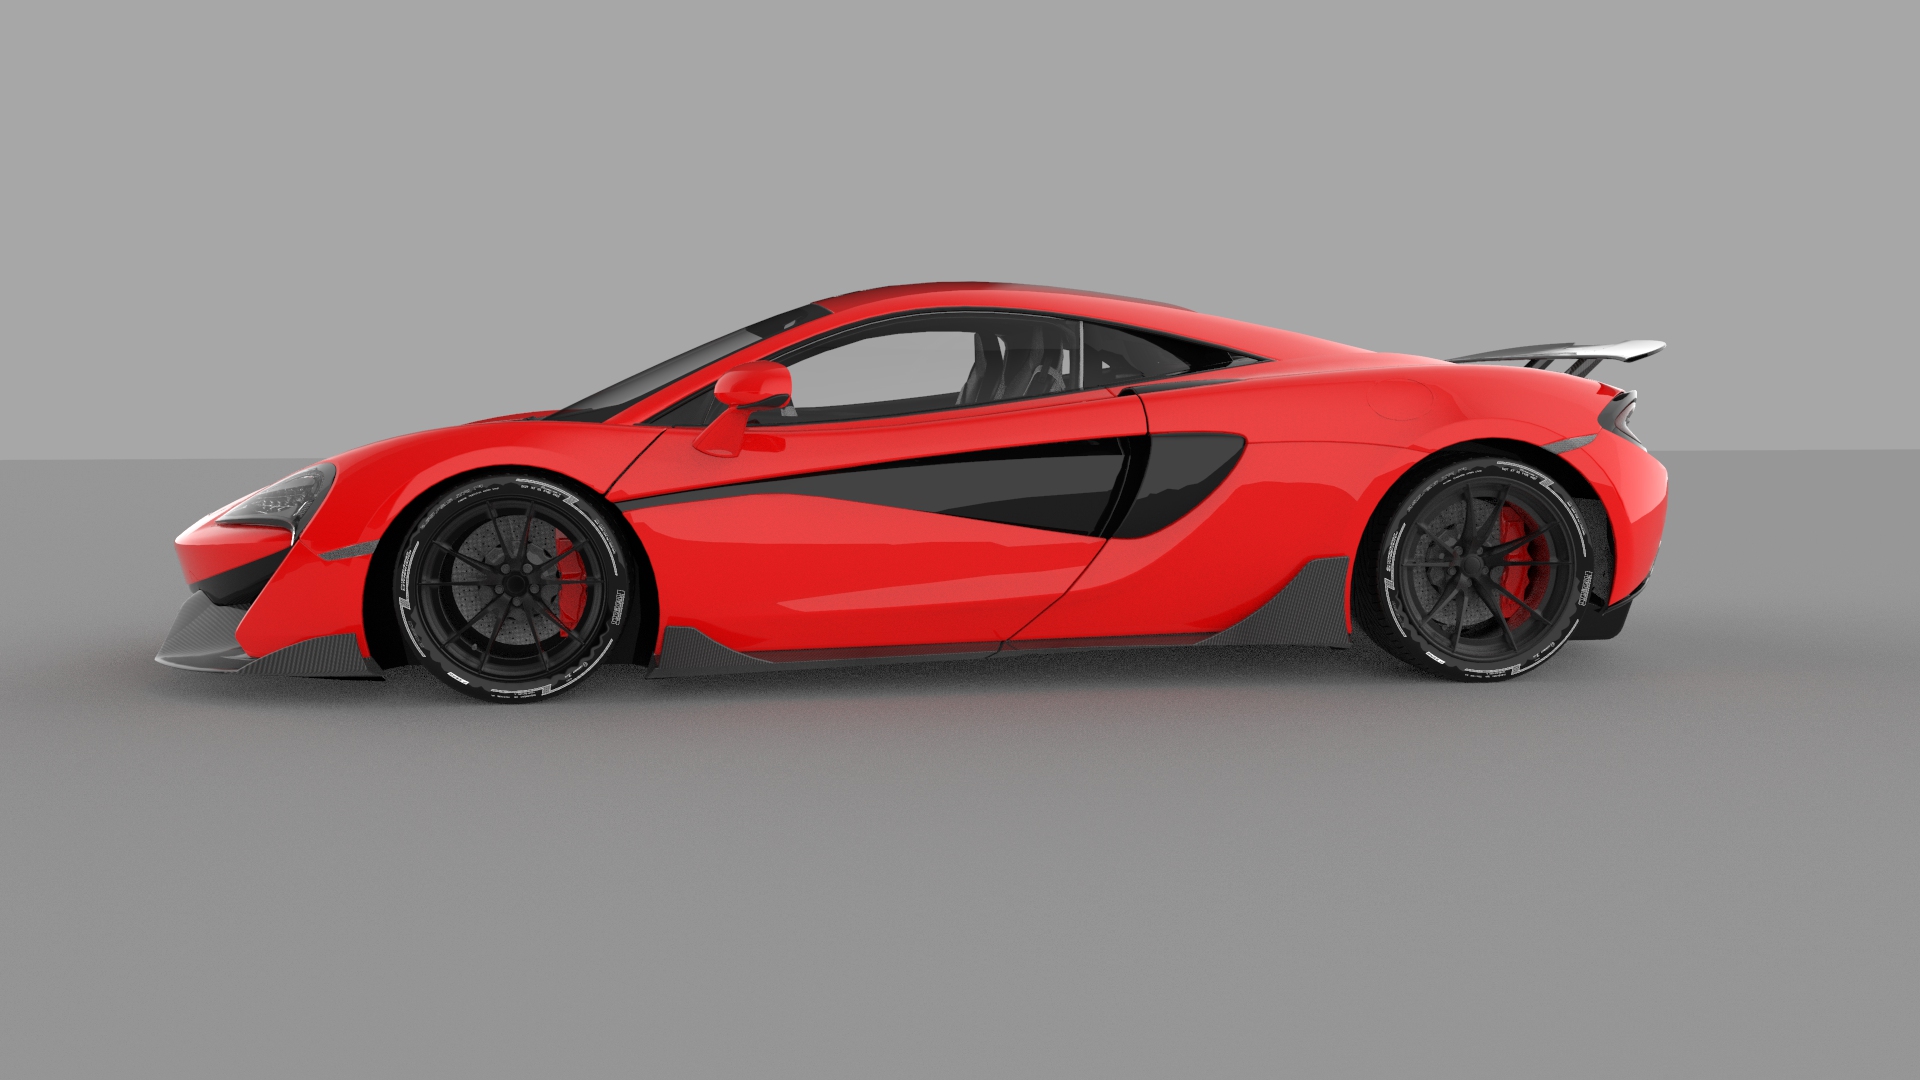 Check price and buy Duke Dynamics Body kit set for McLaren 570s